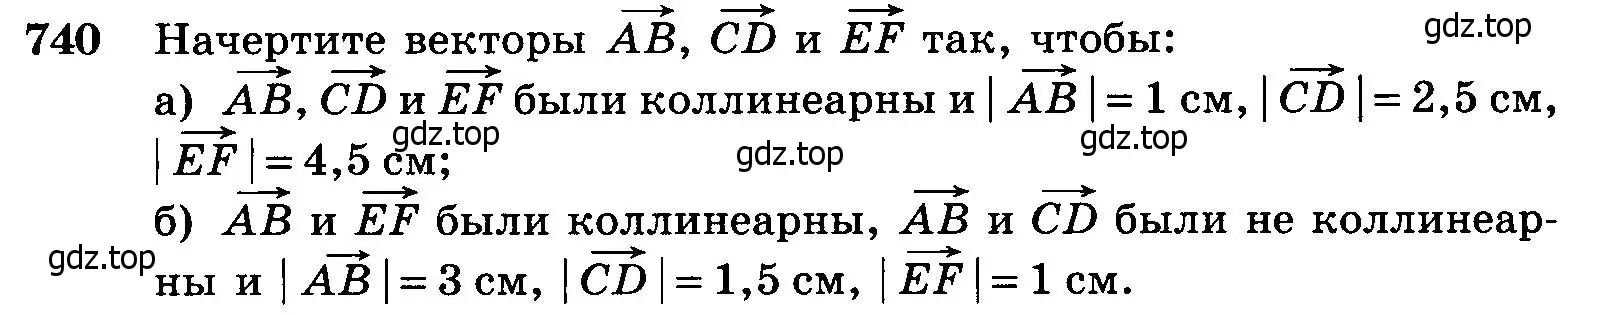 Условие номер 740 (страница 193) гдз по геометрии 7-9 класс Атанасян, Бутузов, учебник